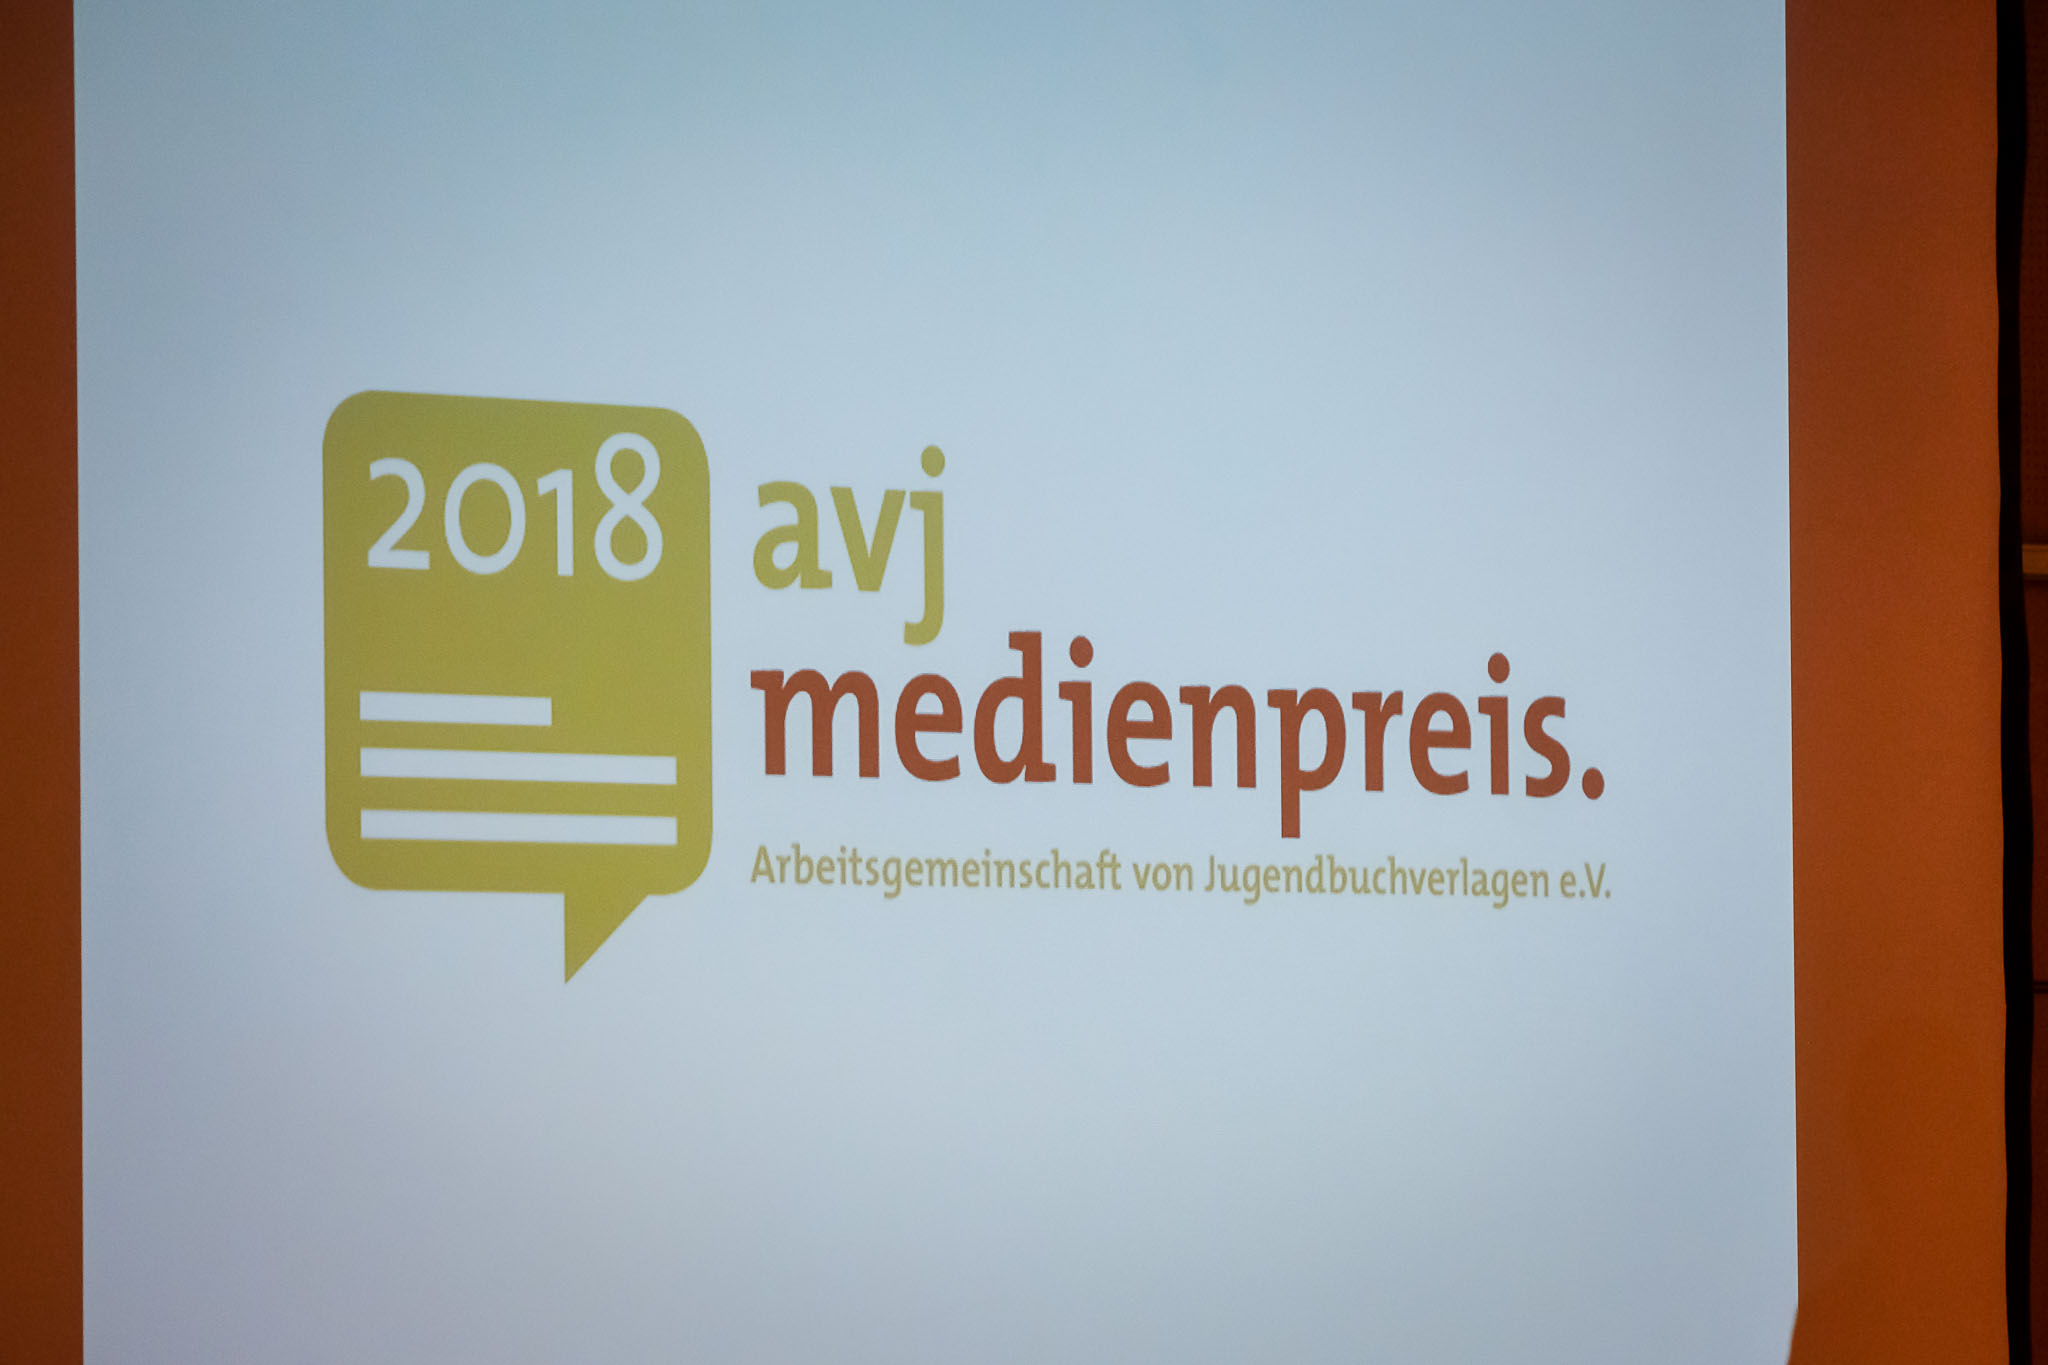 avj medienpreis 2018